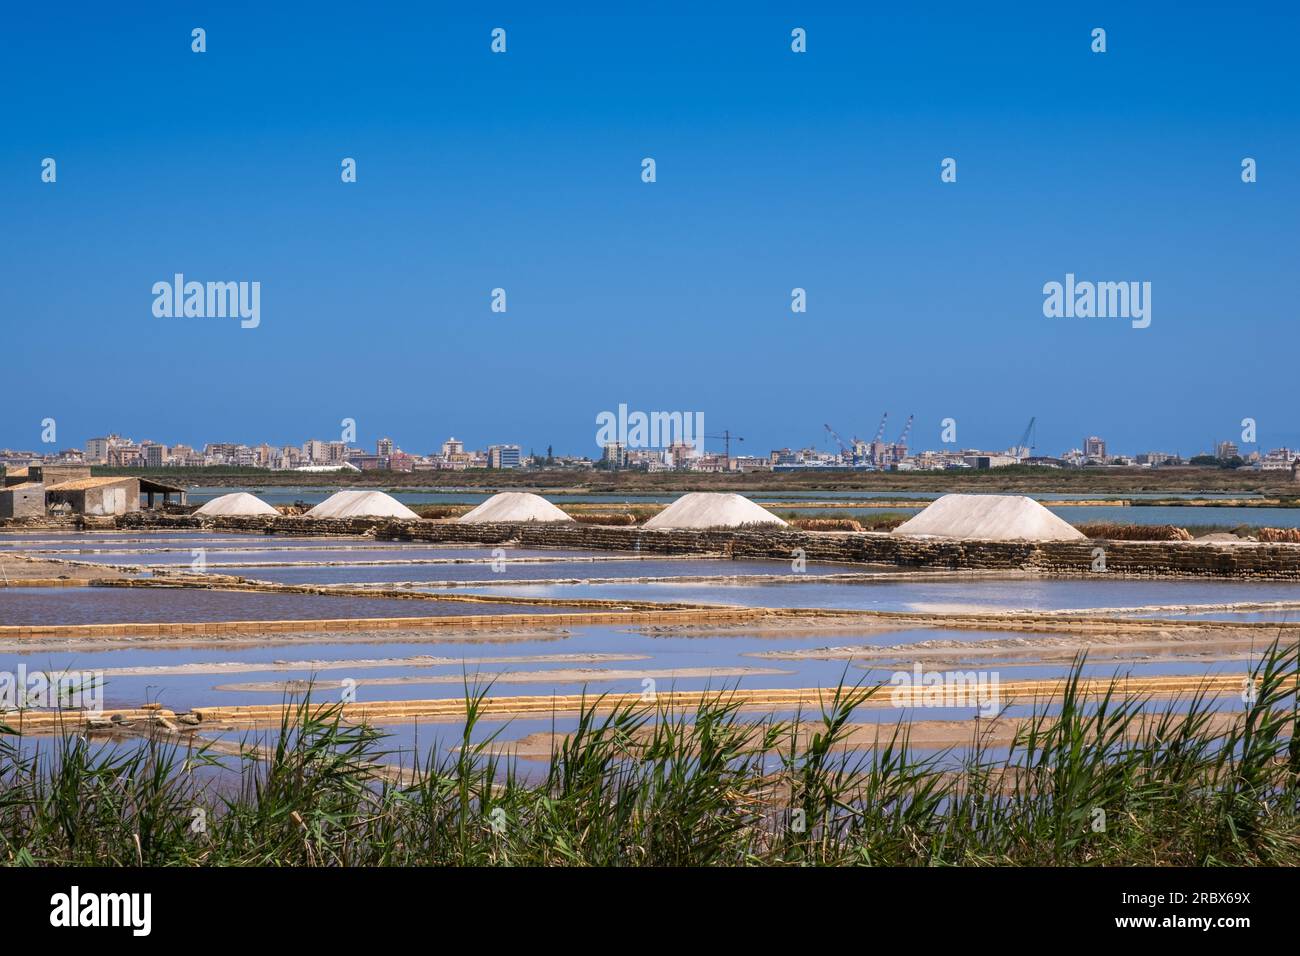 Salt evoporation pond in Marsala, Trapani province, Sicily Stock Photo